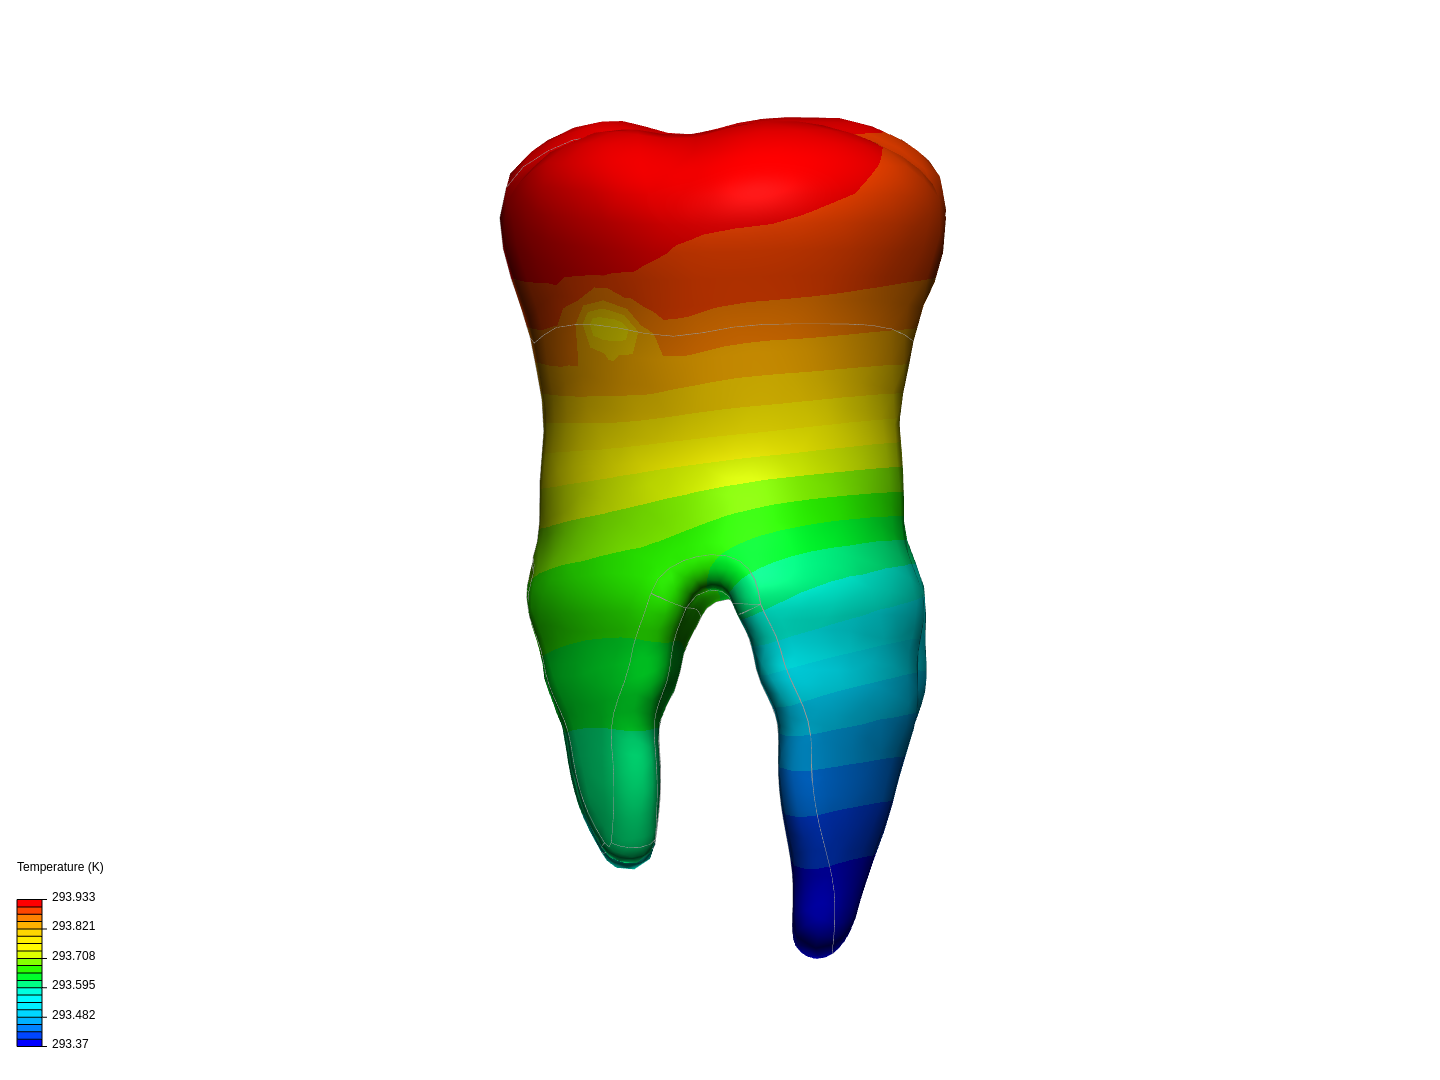 teeth 1 image